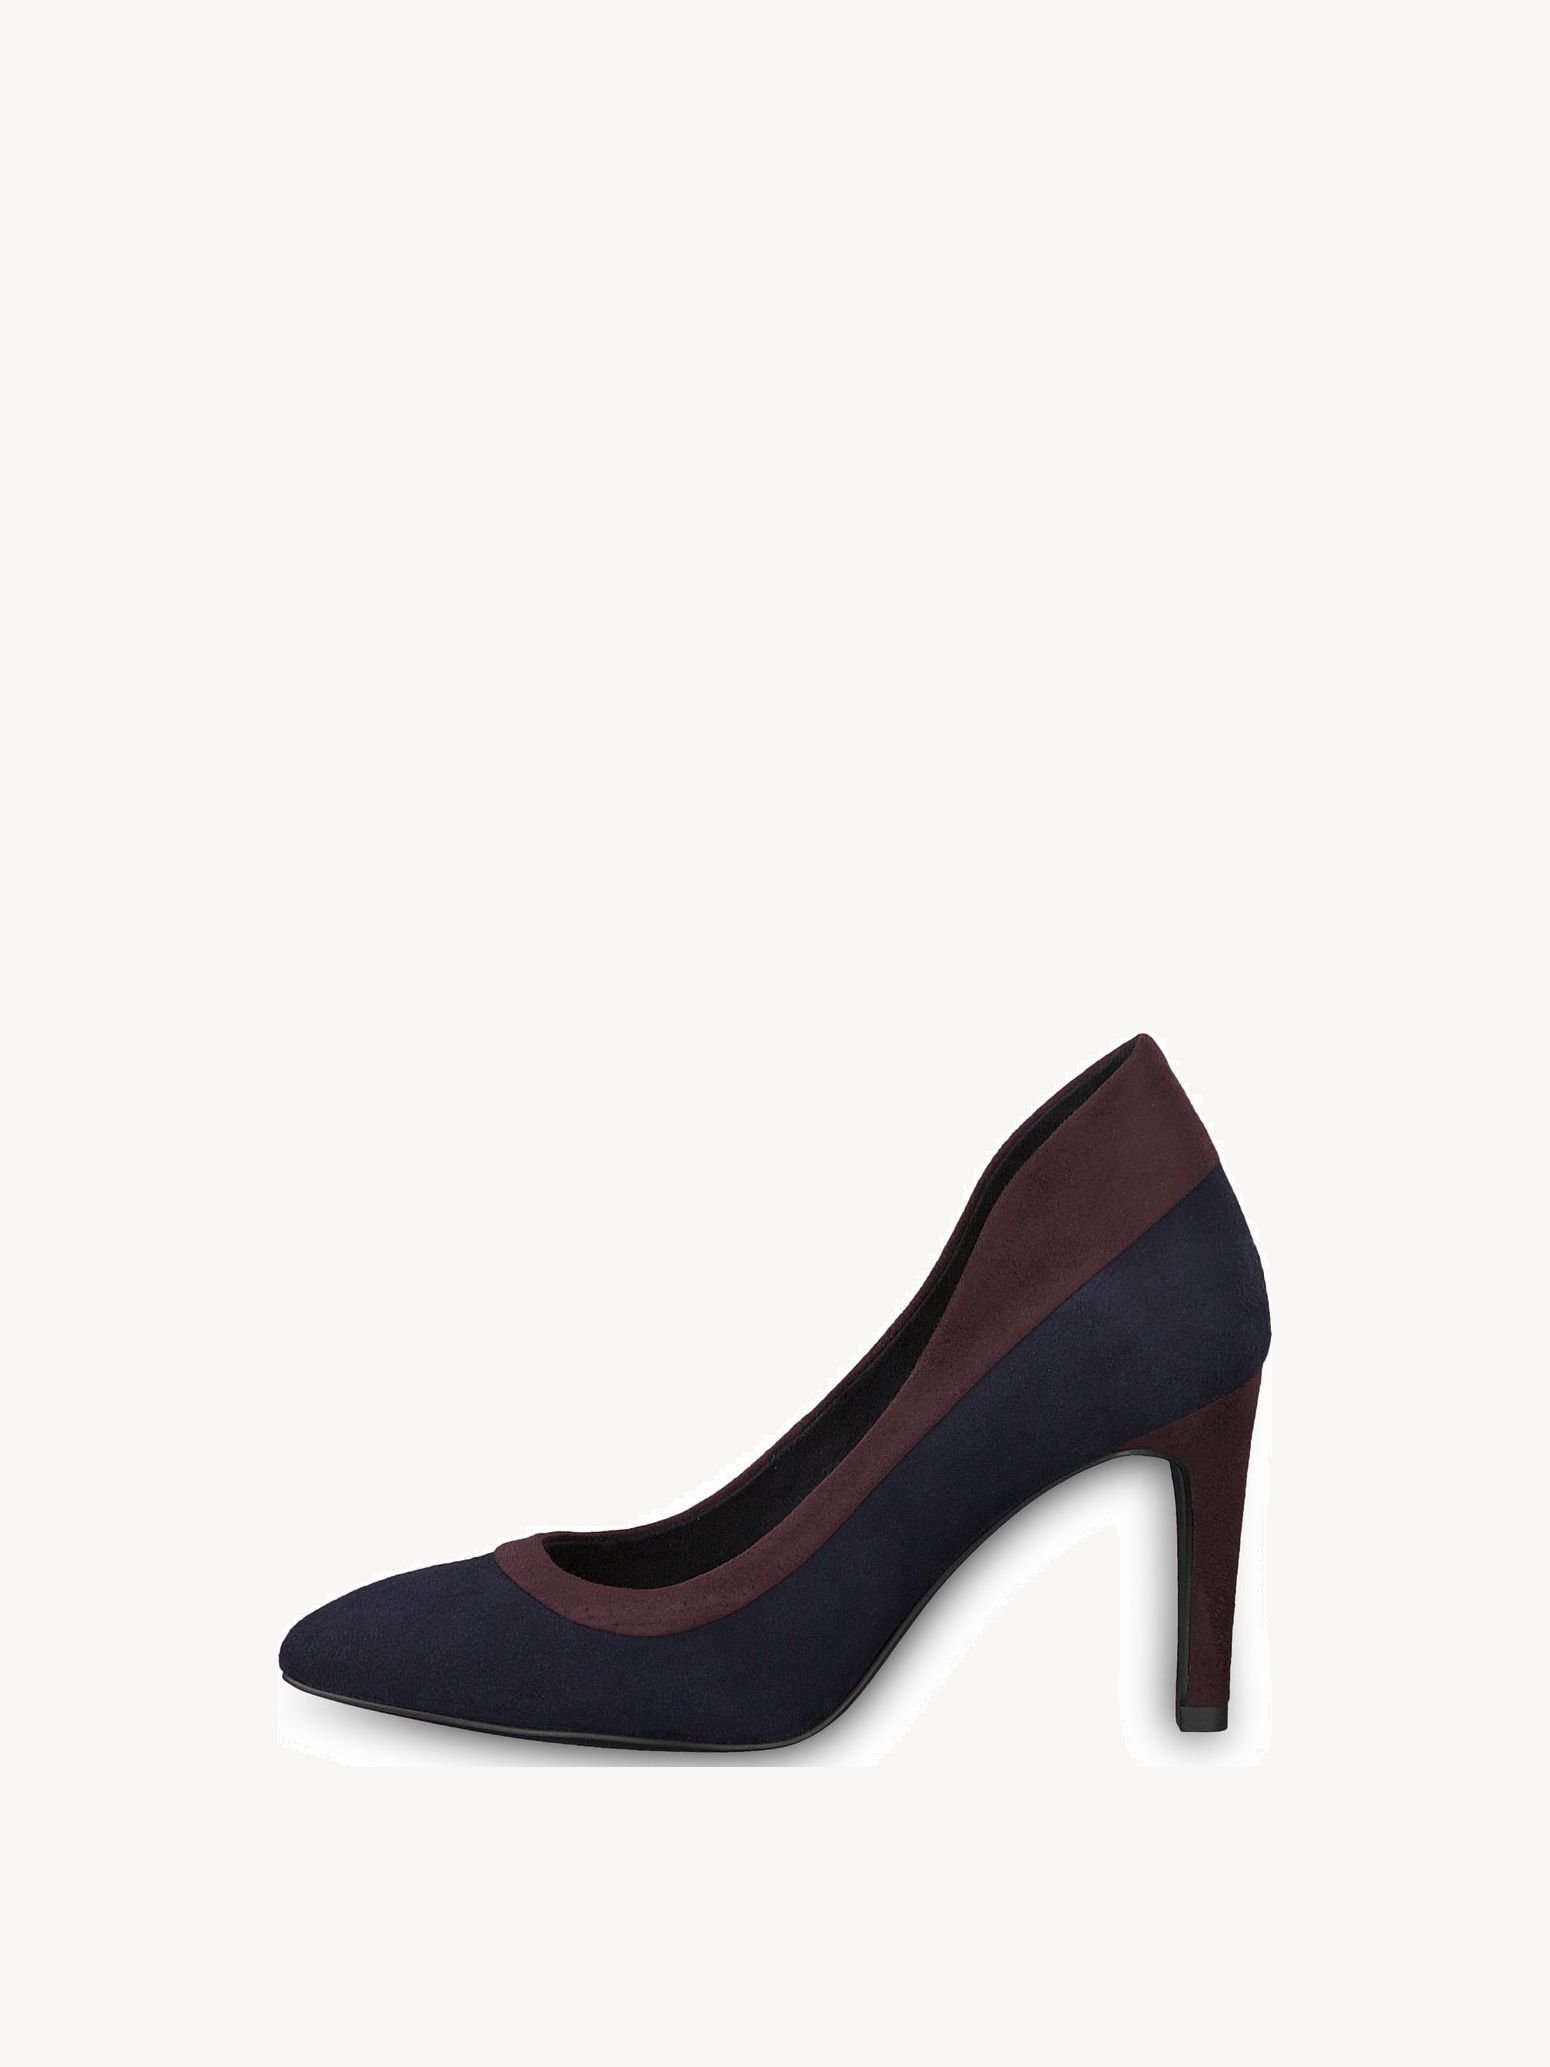 high heels for sale online cheap